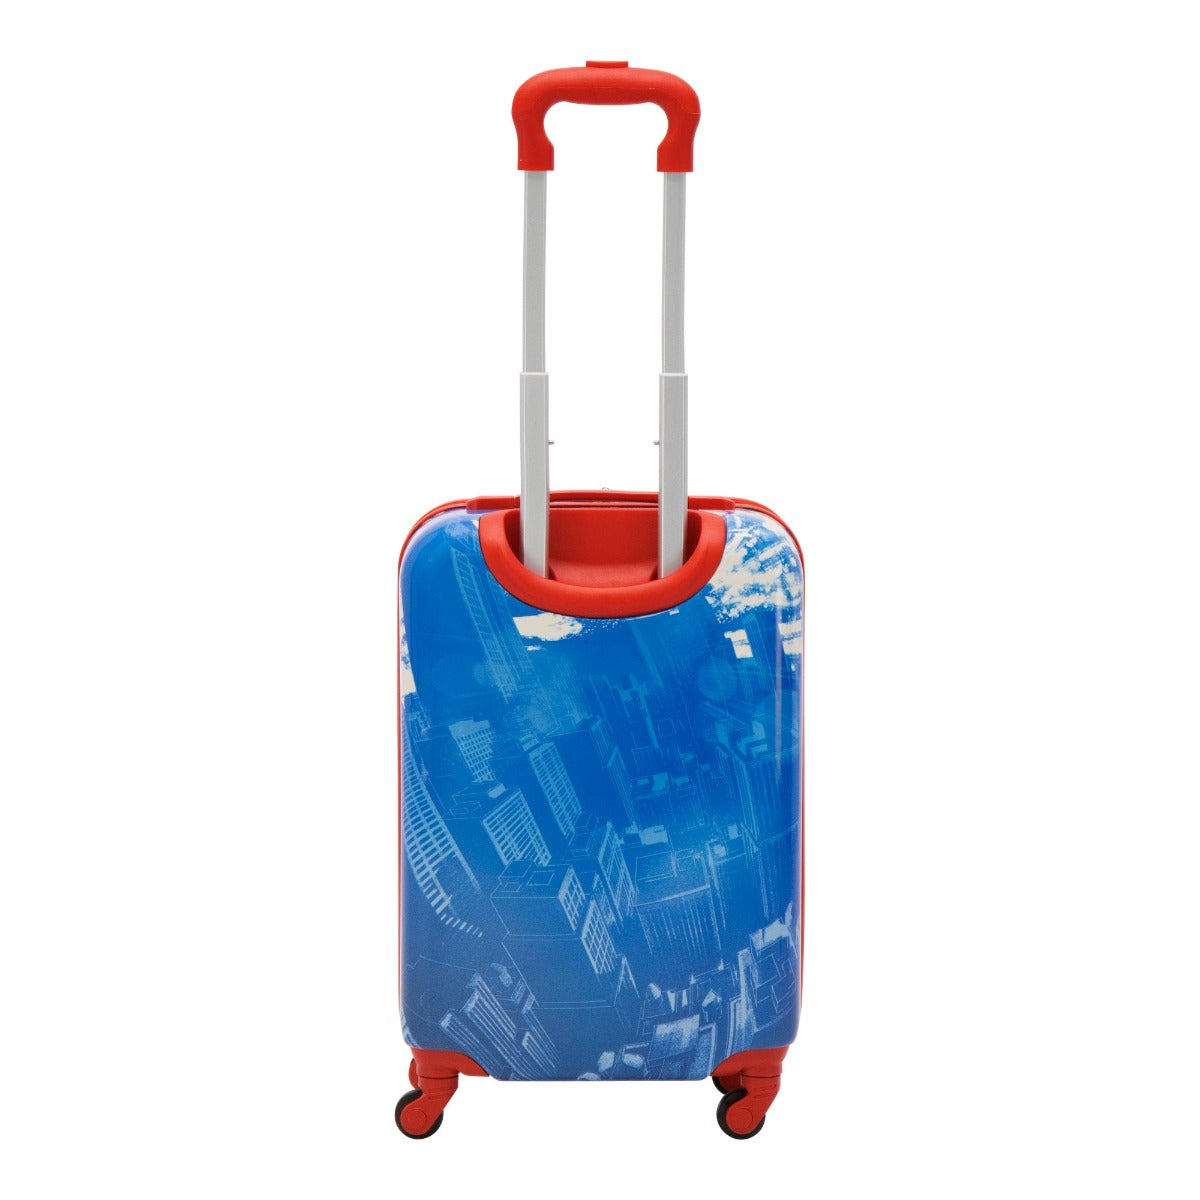 Marvel Ful Spiderman Web Slinging Hardside Spinner Suitcase - 21 inch Carry On Kids Travel Luggage